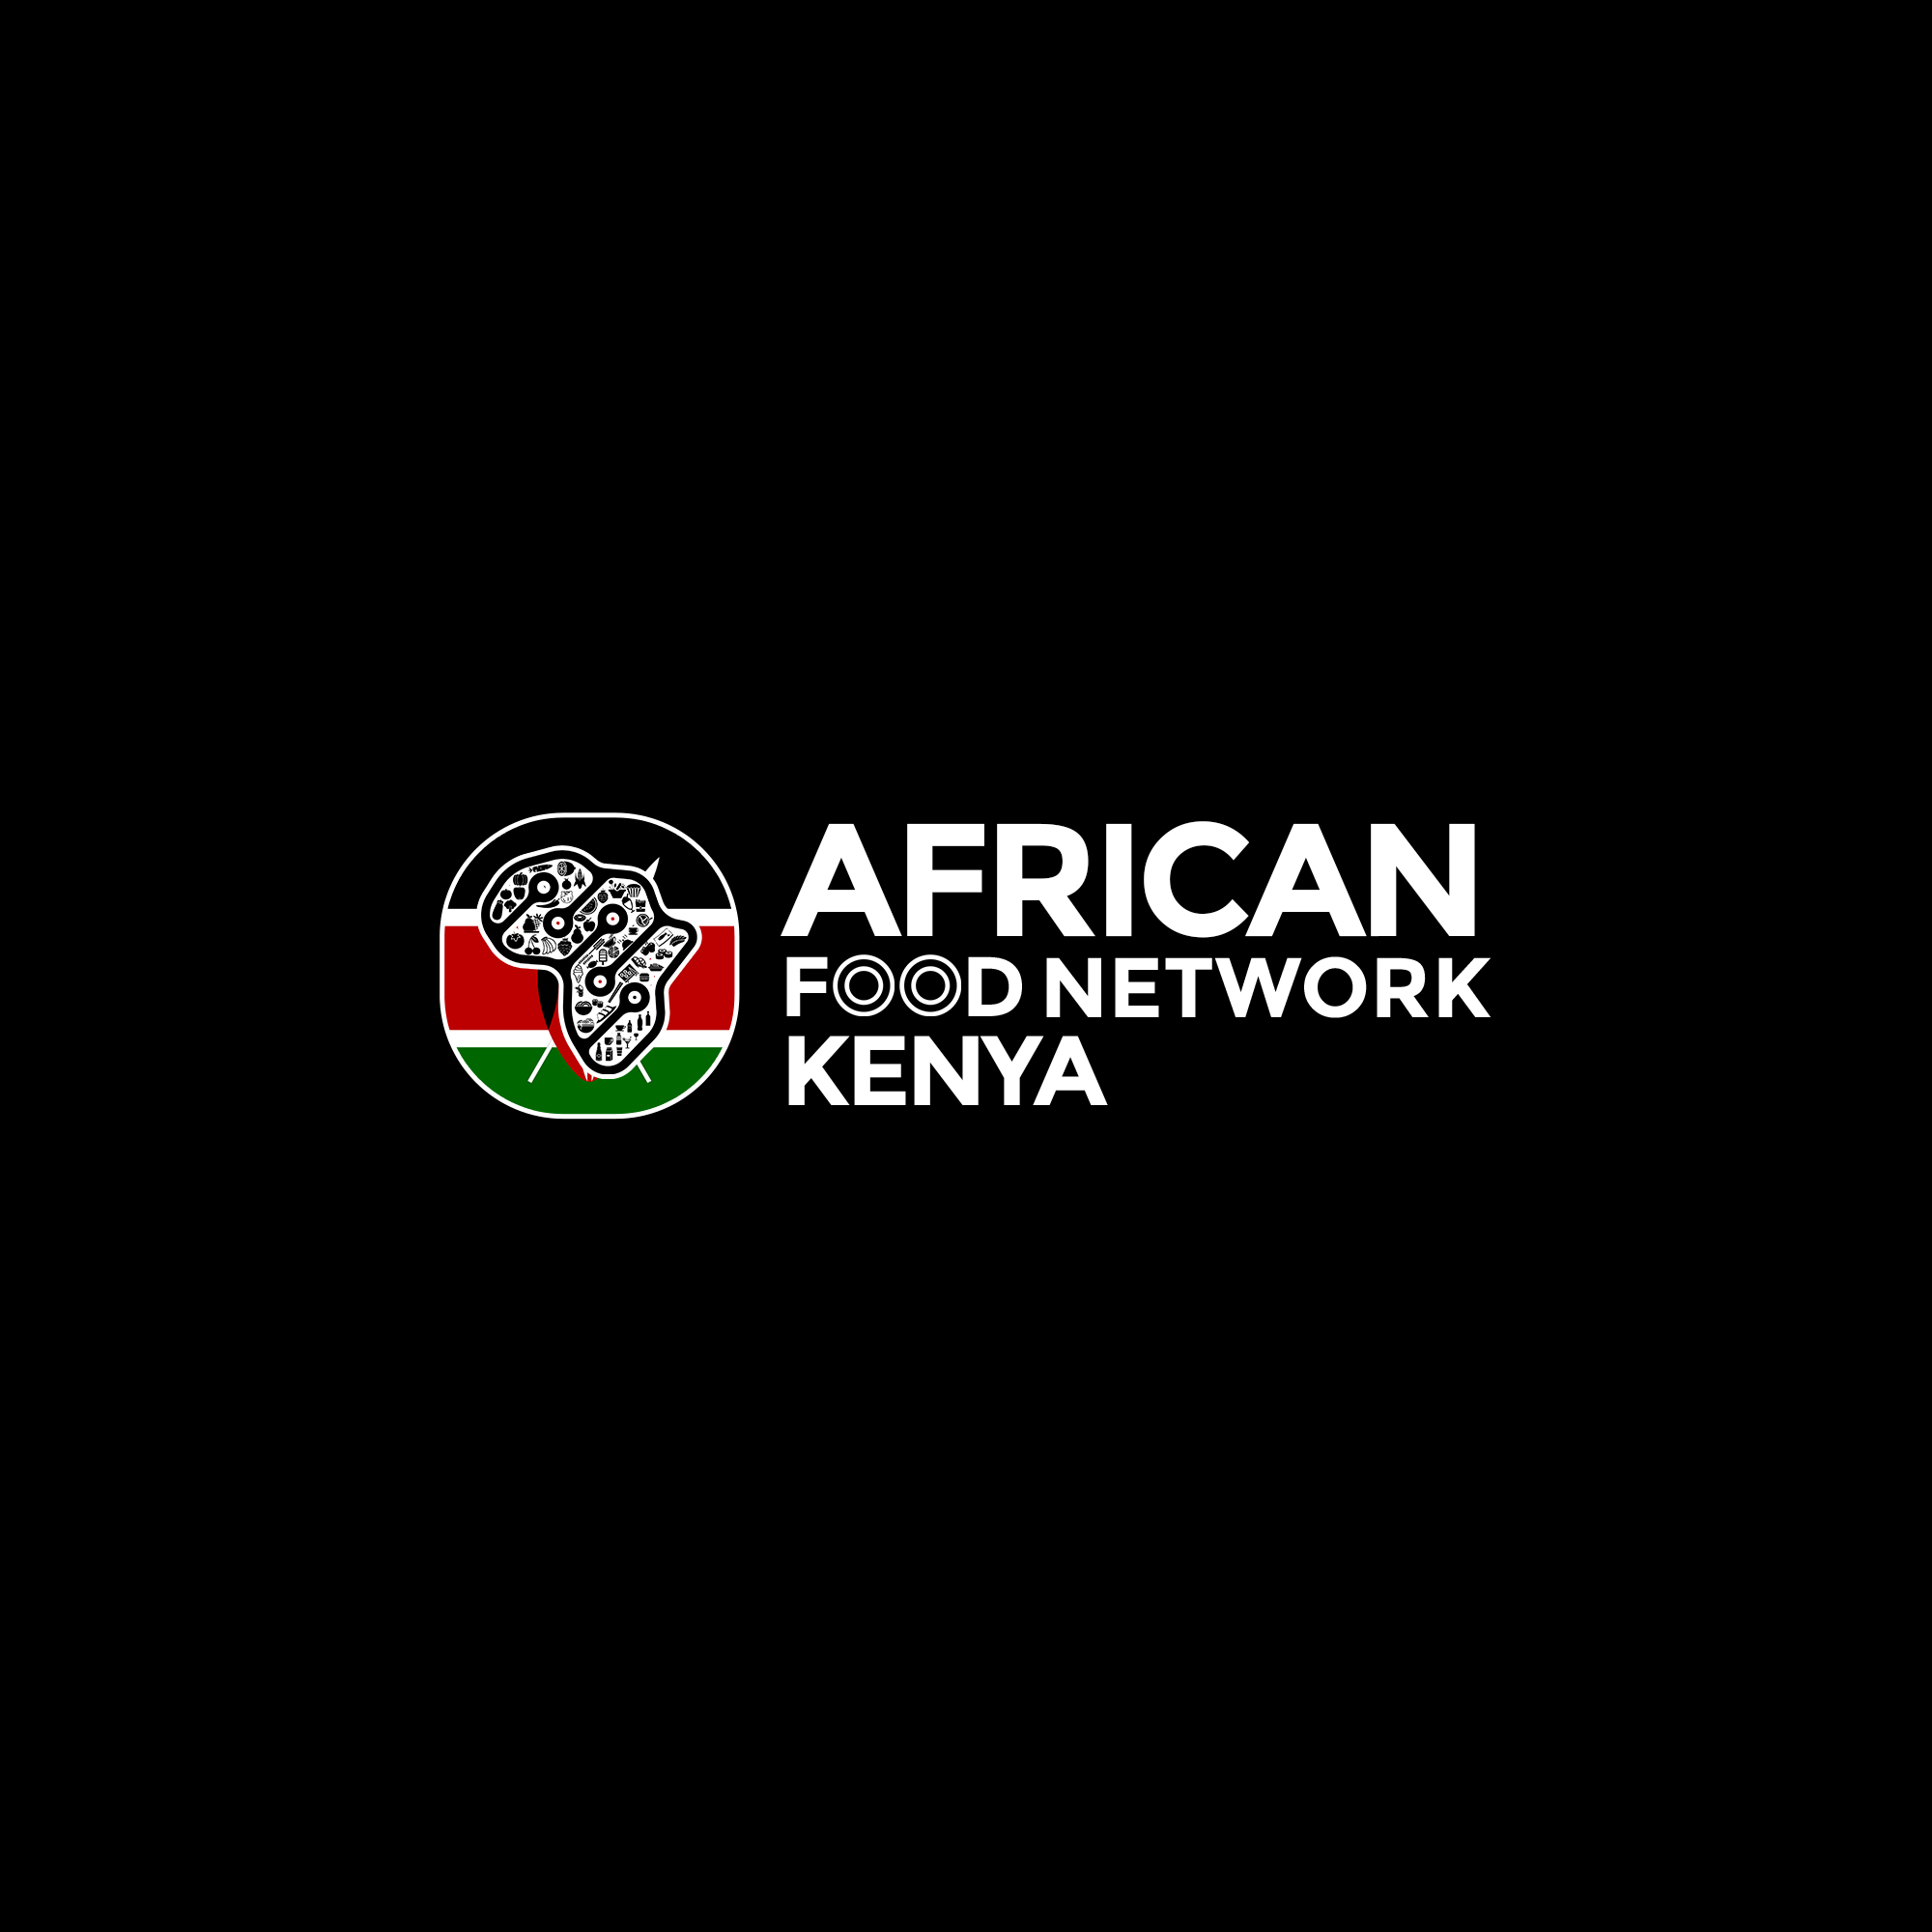 AFRICAN FOOD NETWORK LOGO KENYA